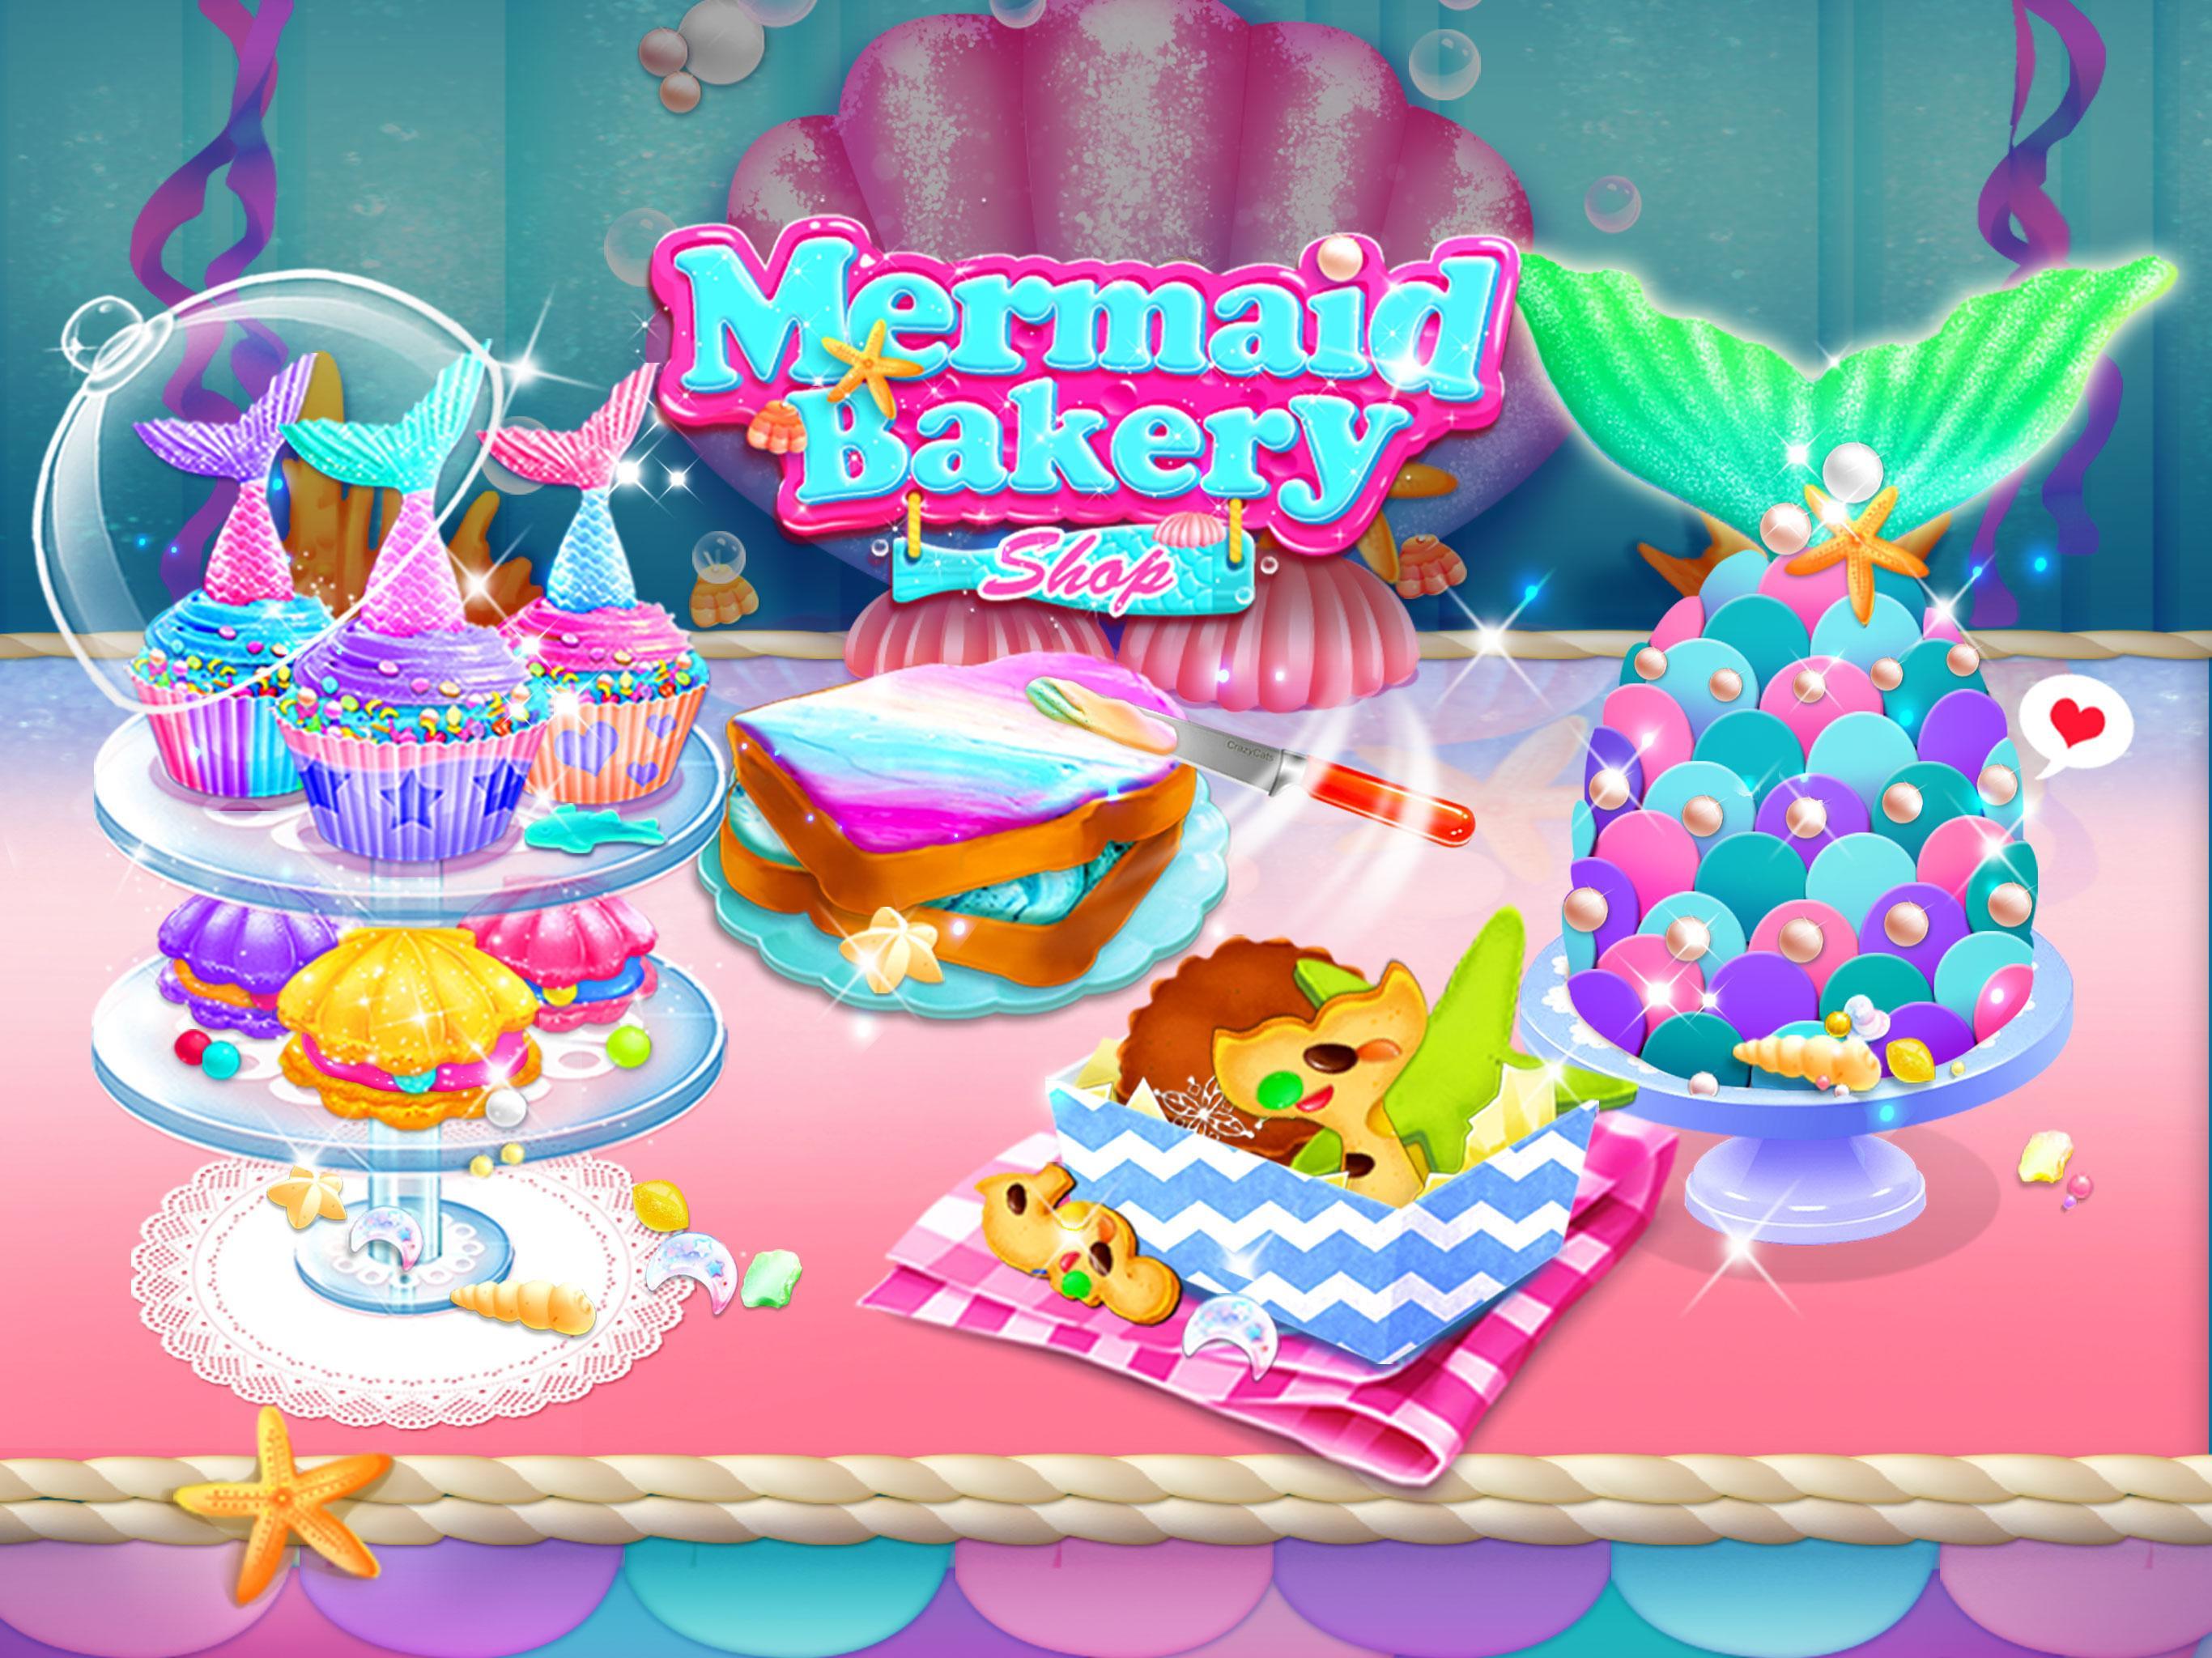 Screenshot 1 of Mermaid Unicorn Cupcake Bakery Shop Cooking Game 1.4